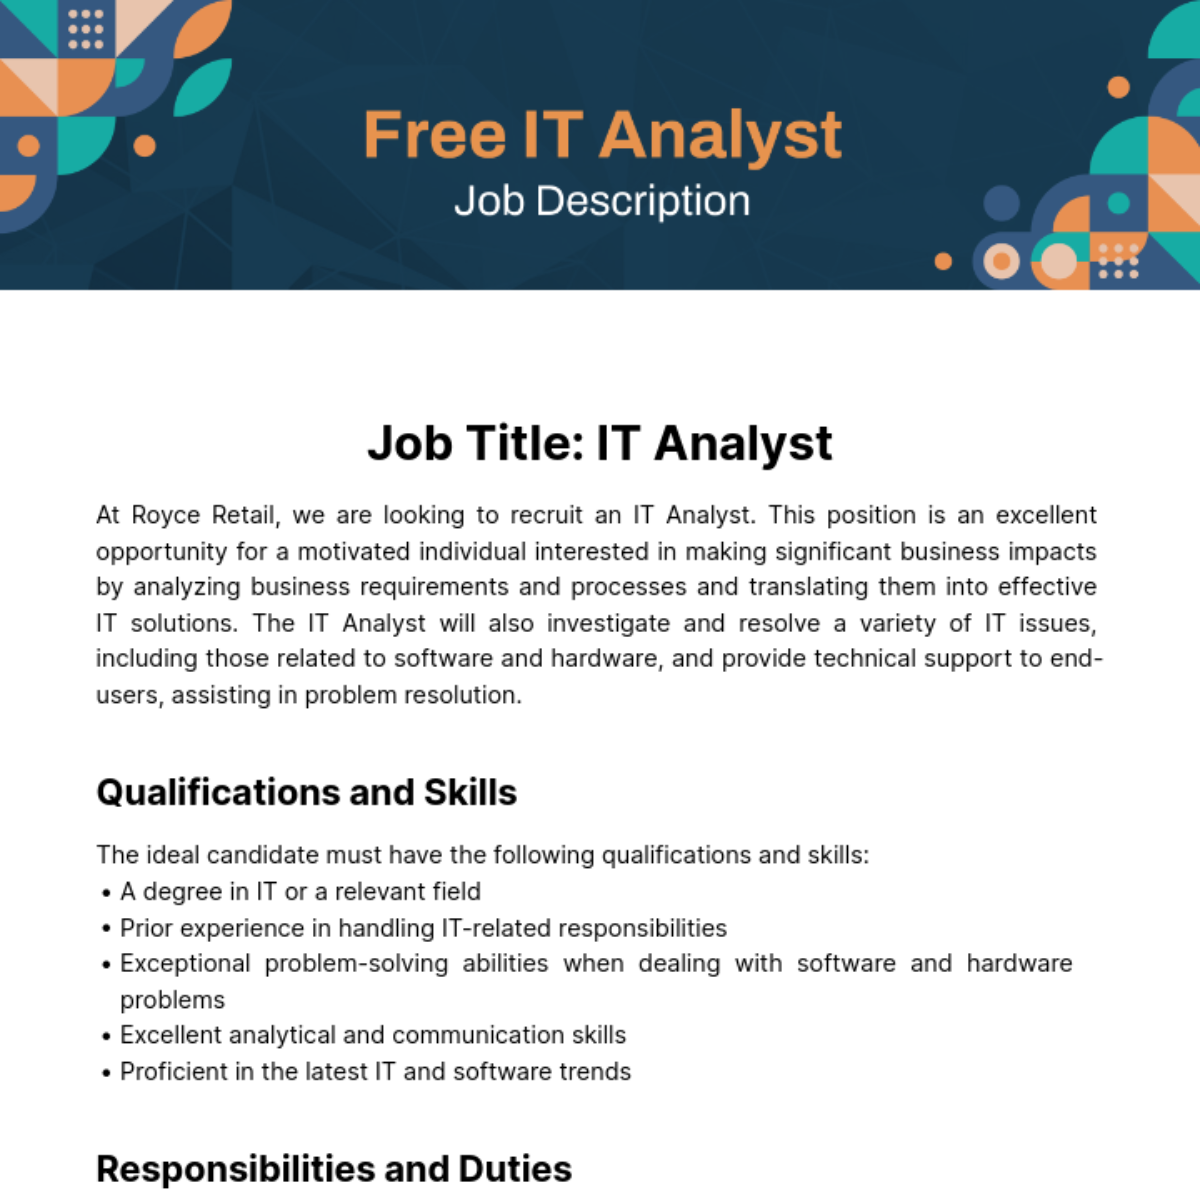 Free IT Analyst Job Description Template